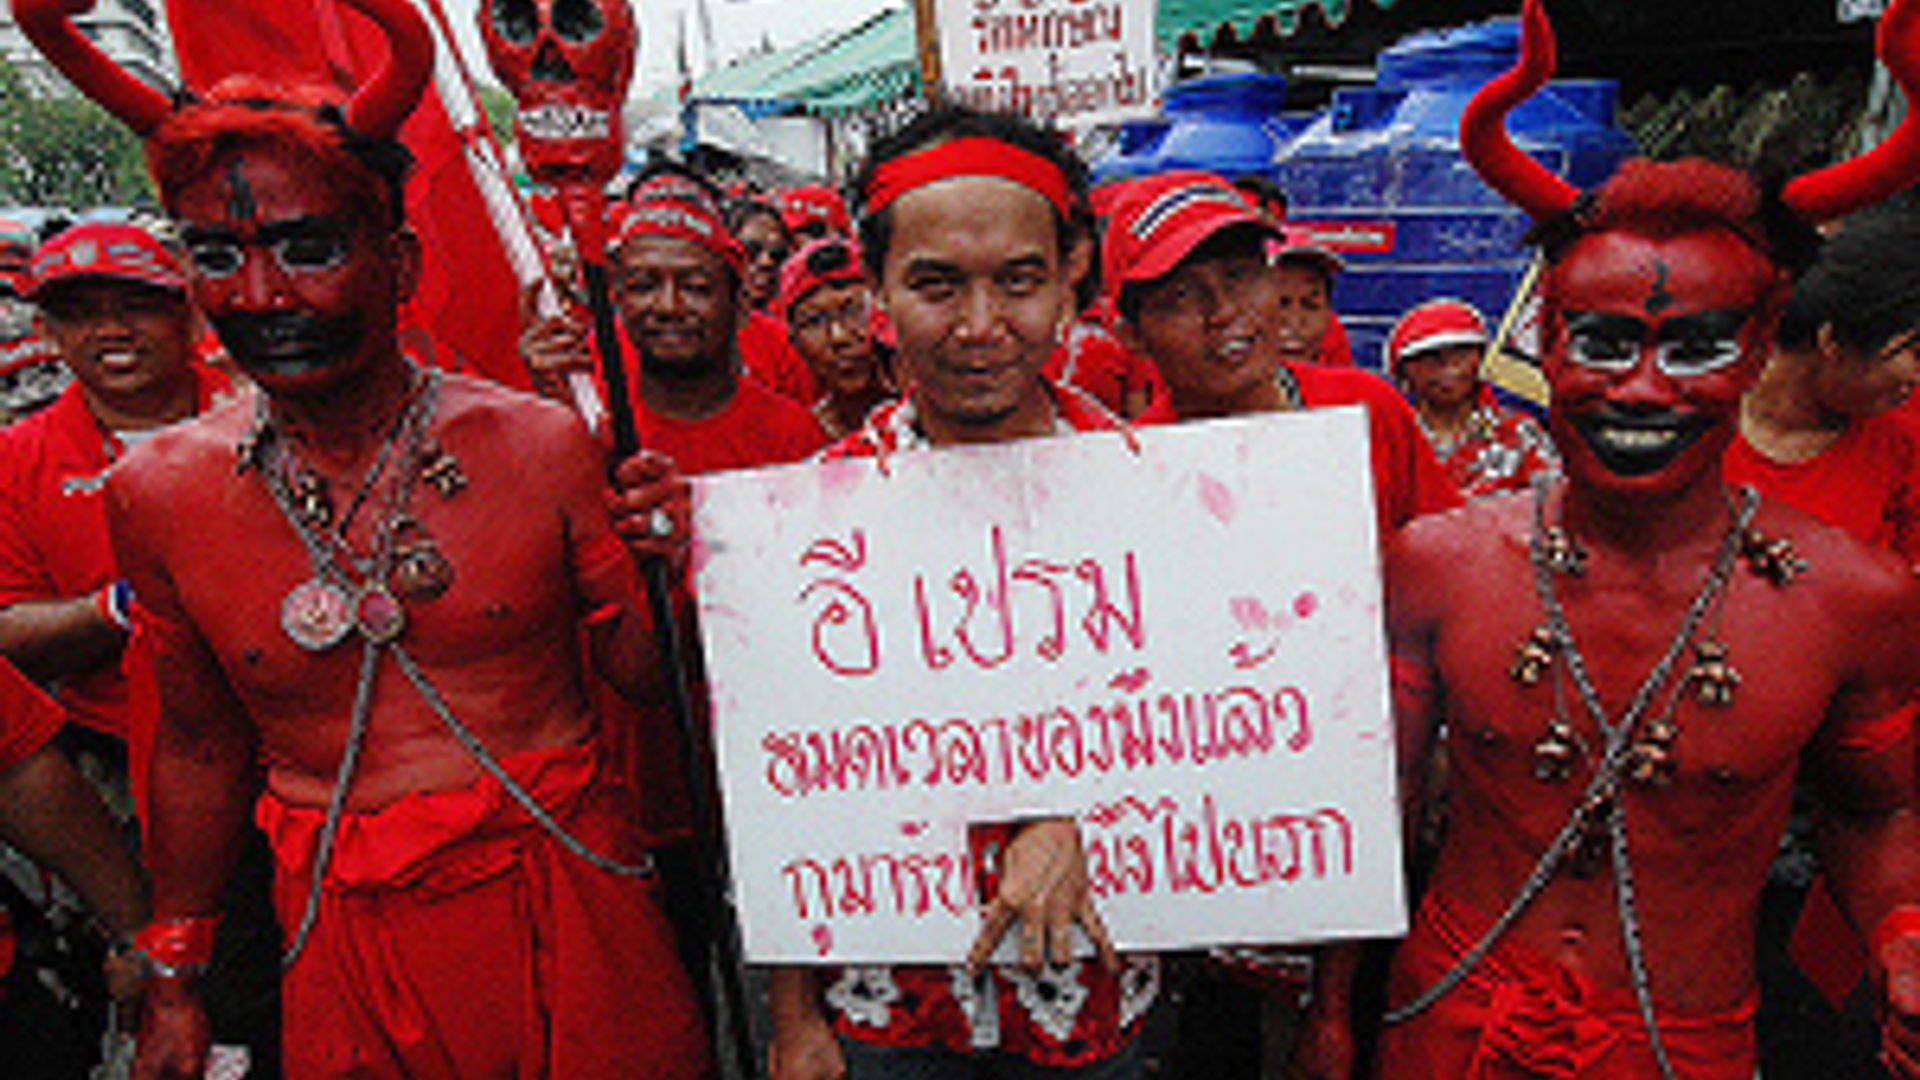 thai-protest-300px.jpg